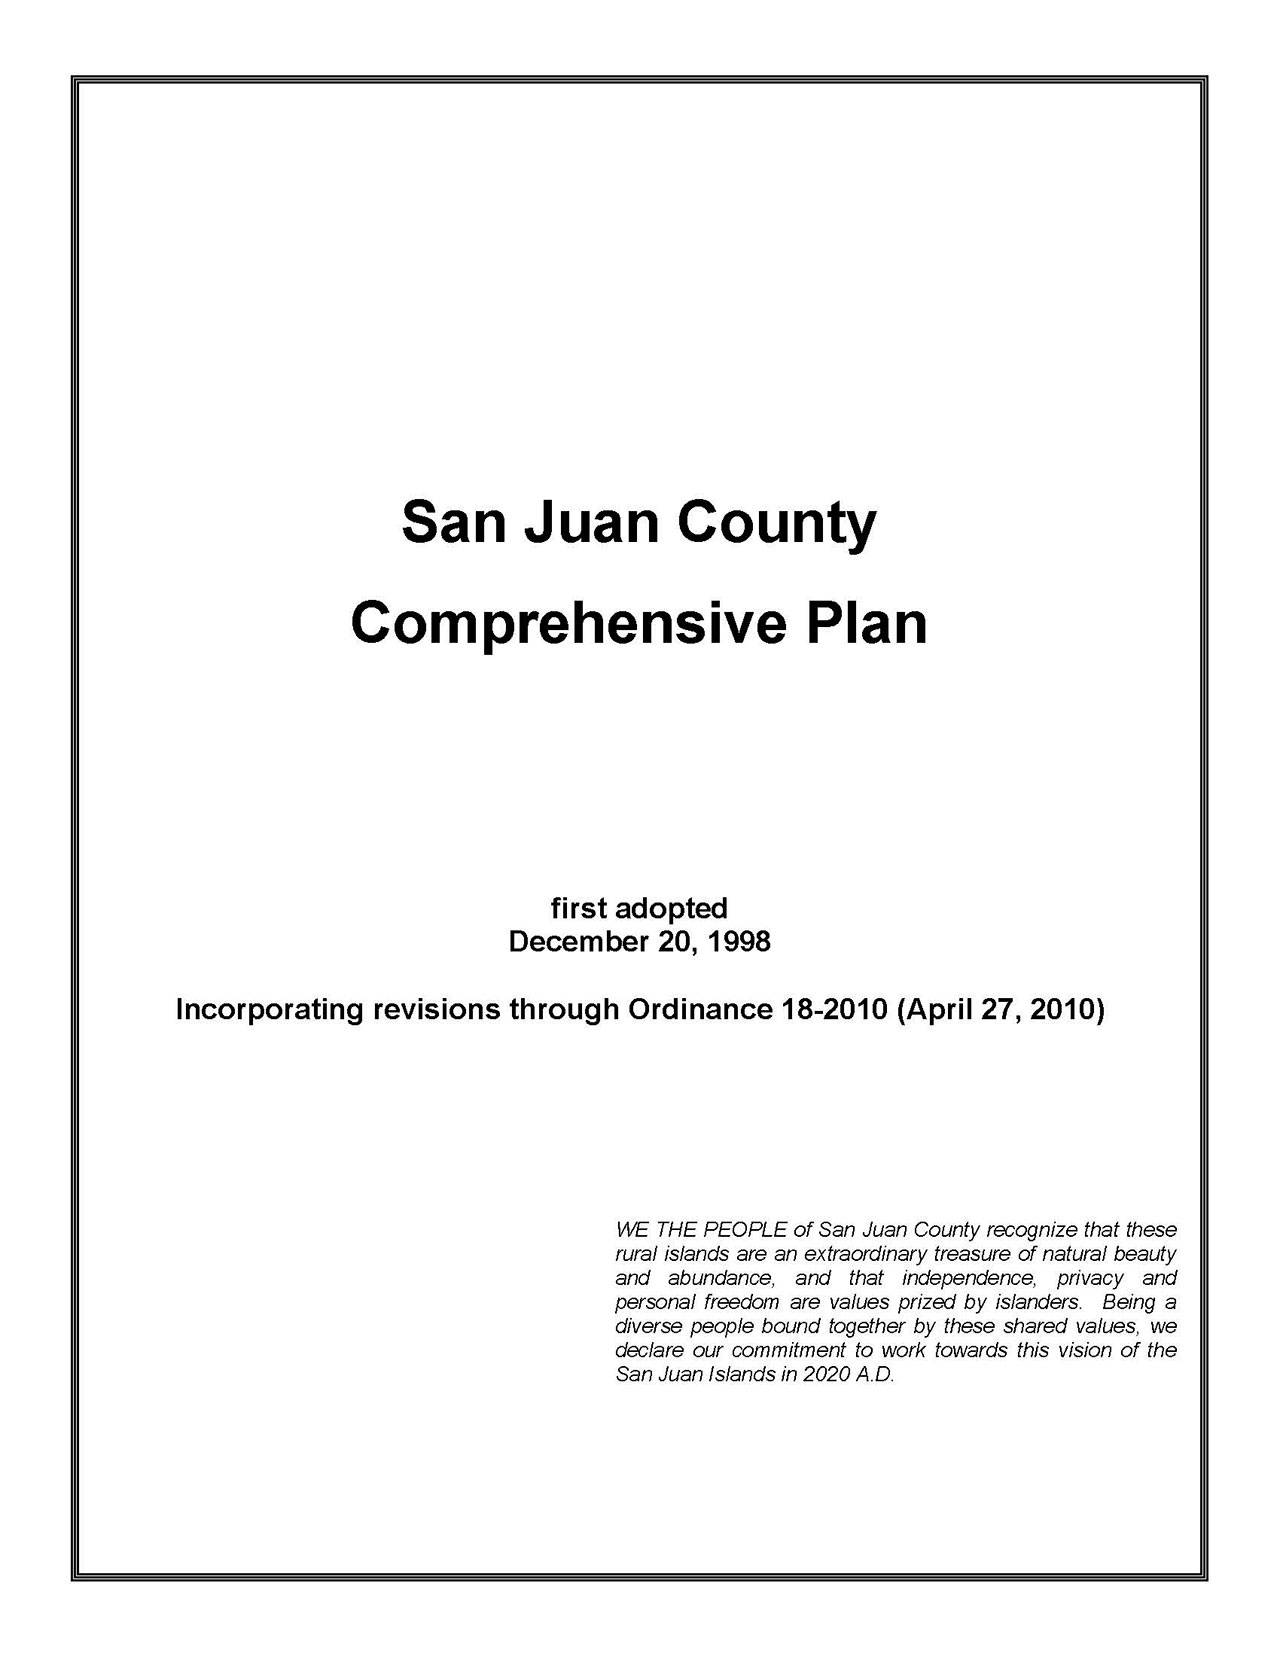 Contributed image/San Juan County